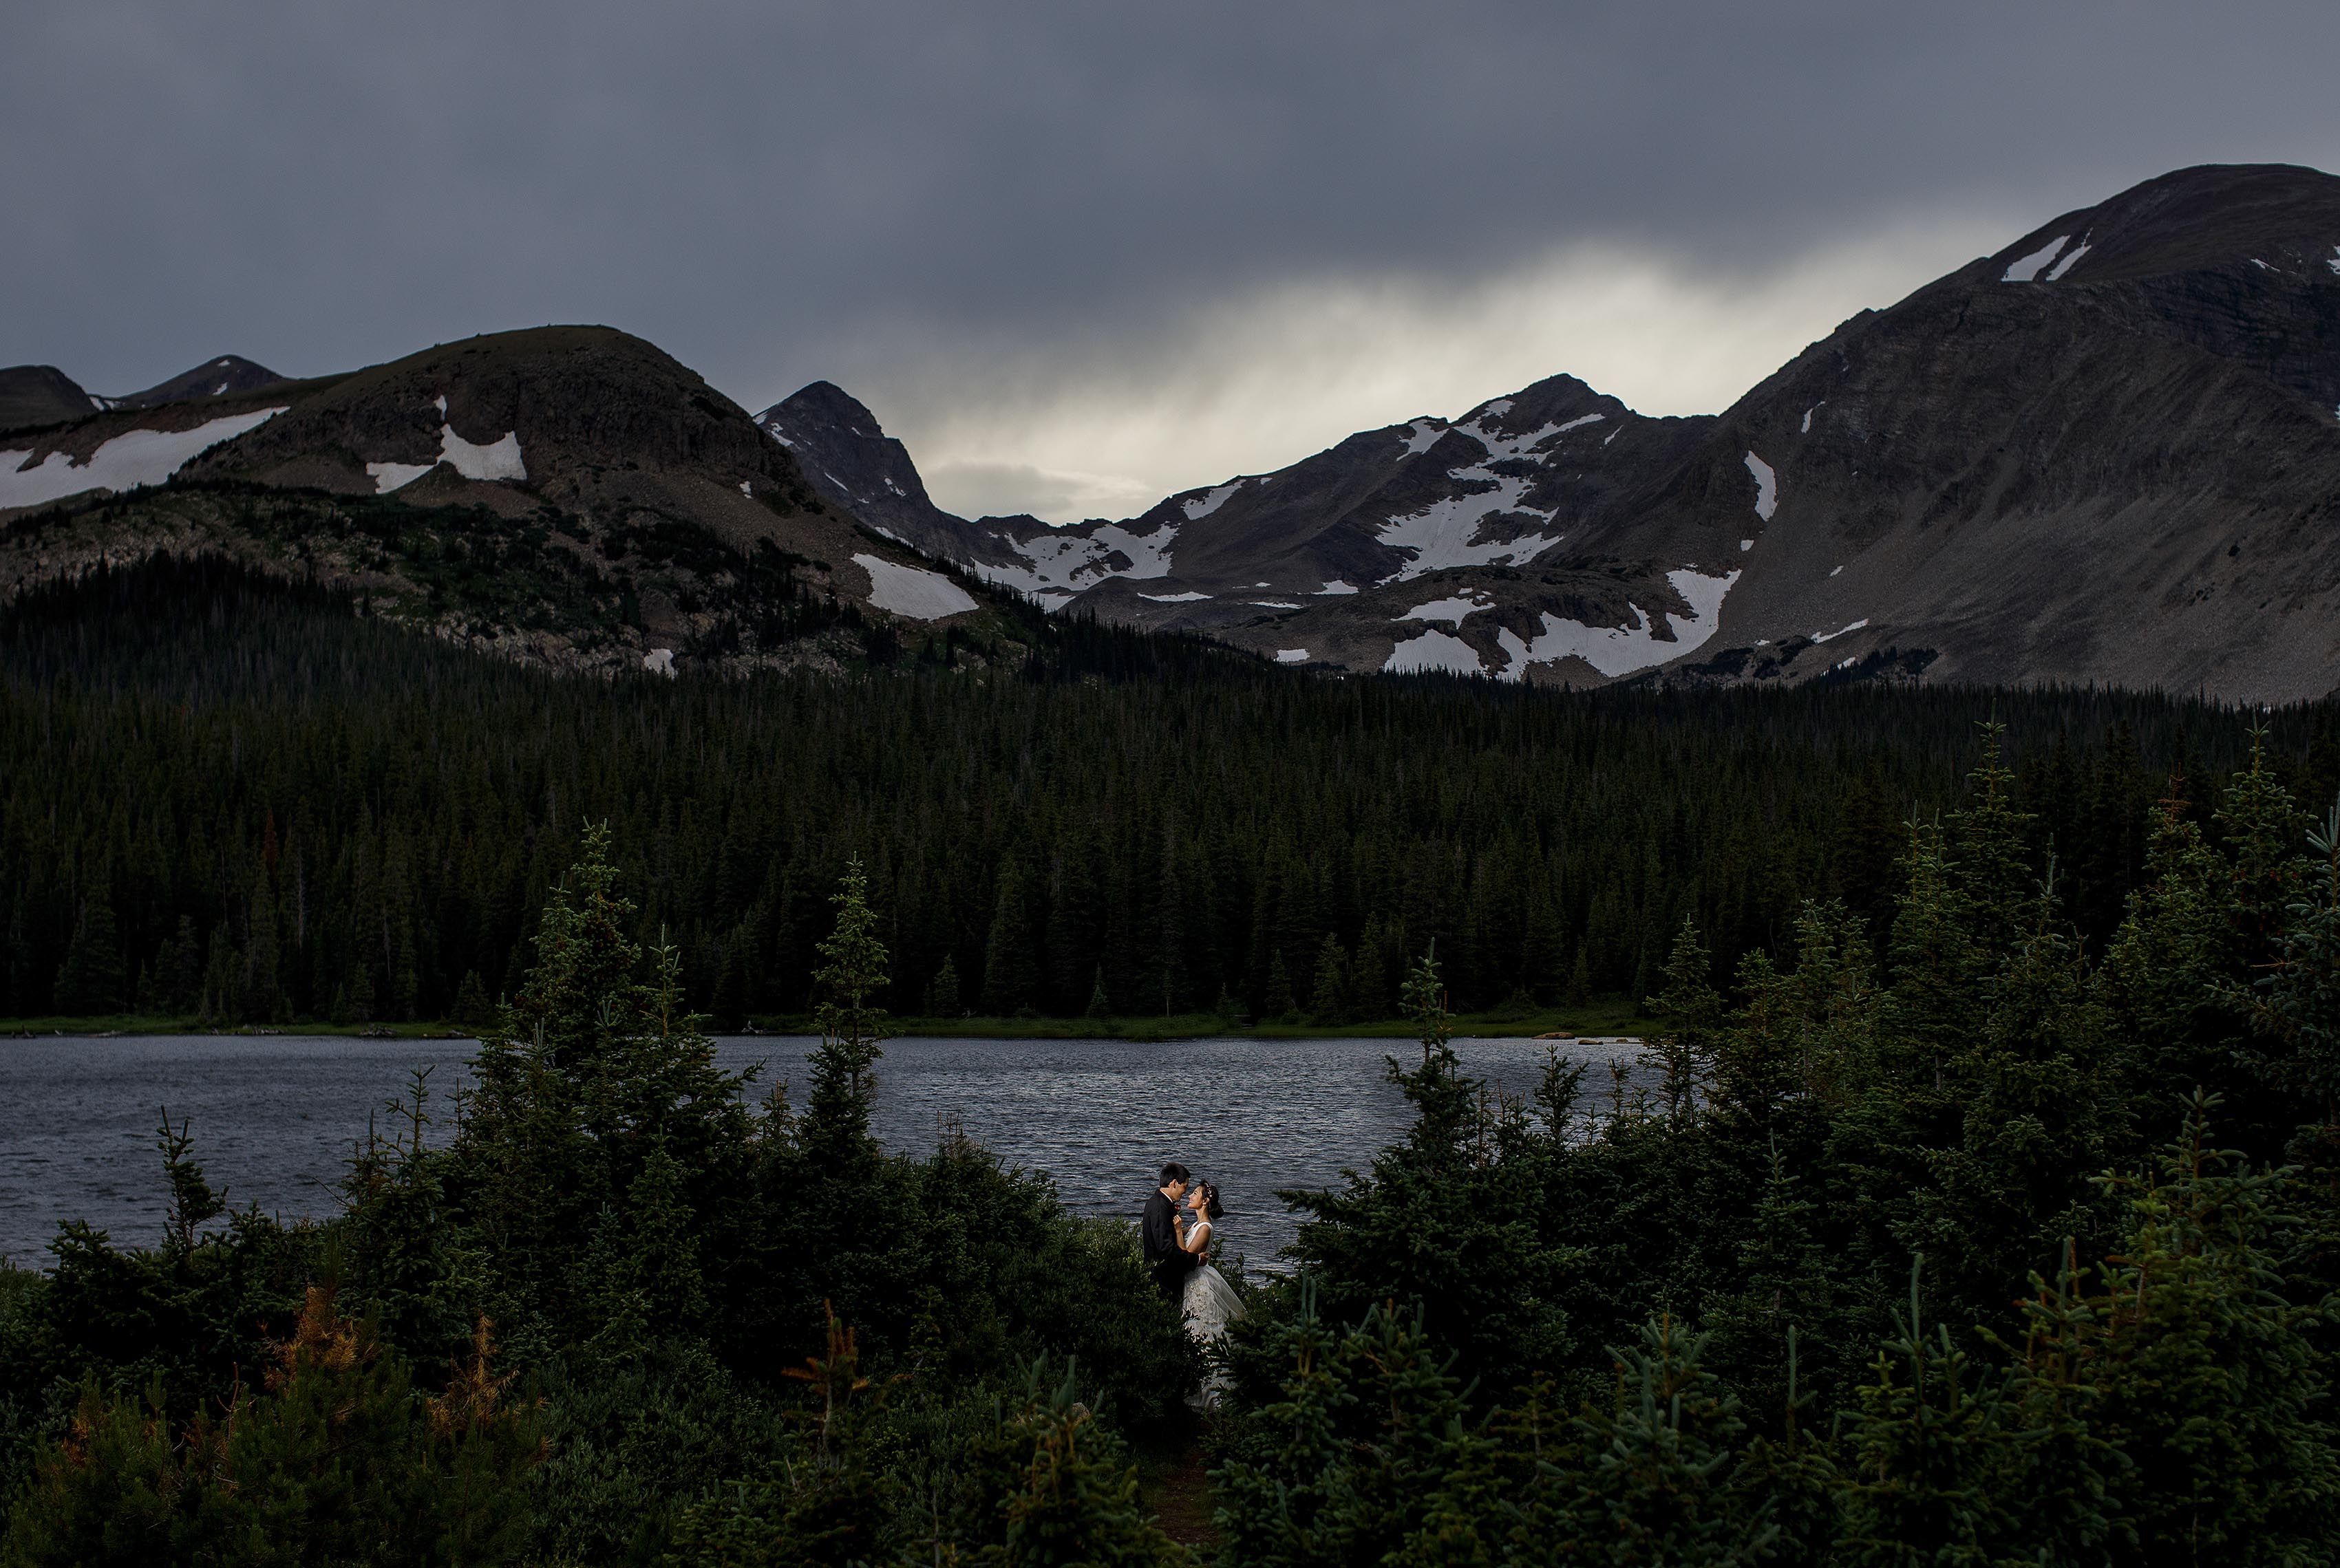 Cecelia and Jamie pose together near Brainard Lake during their Colorado mountain elopement